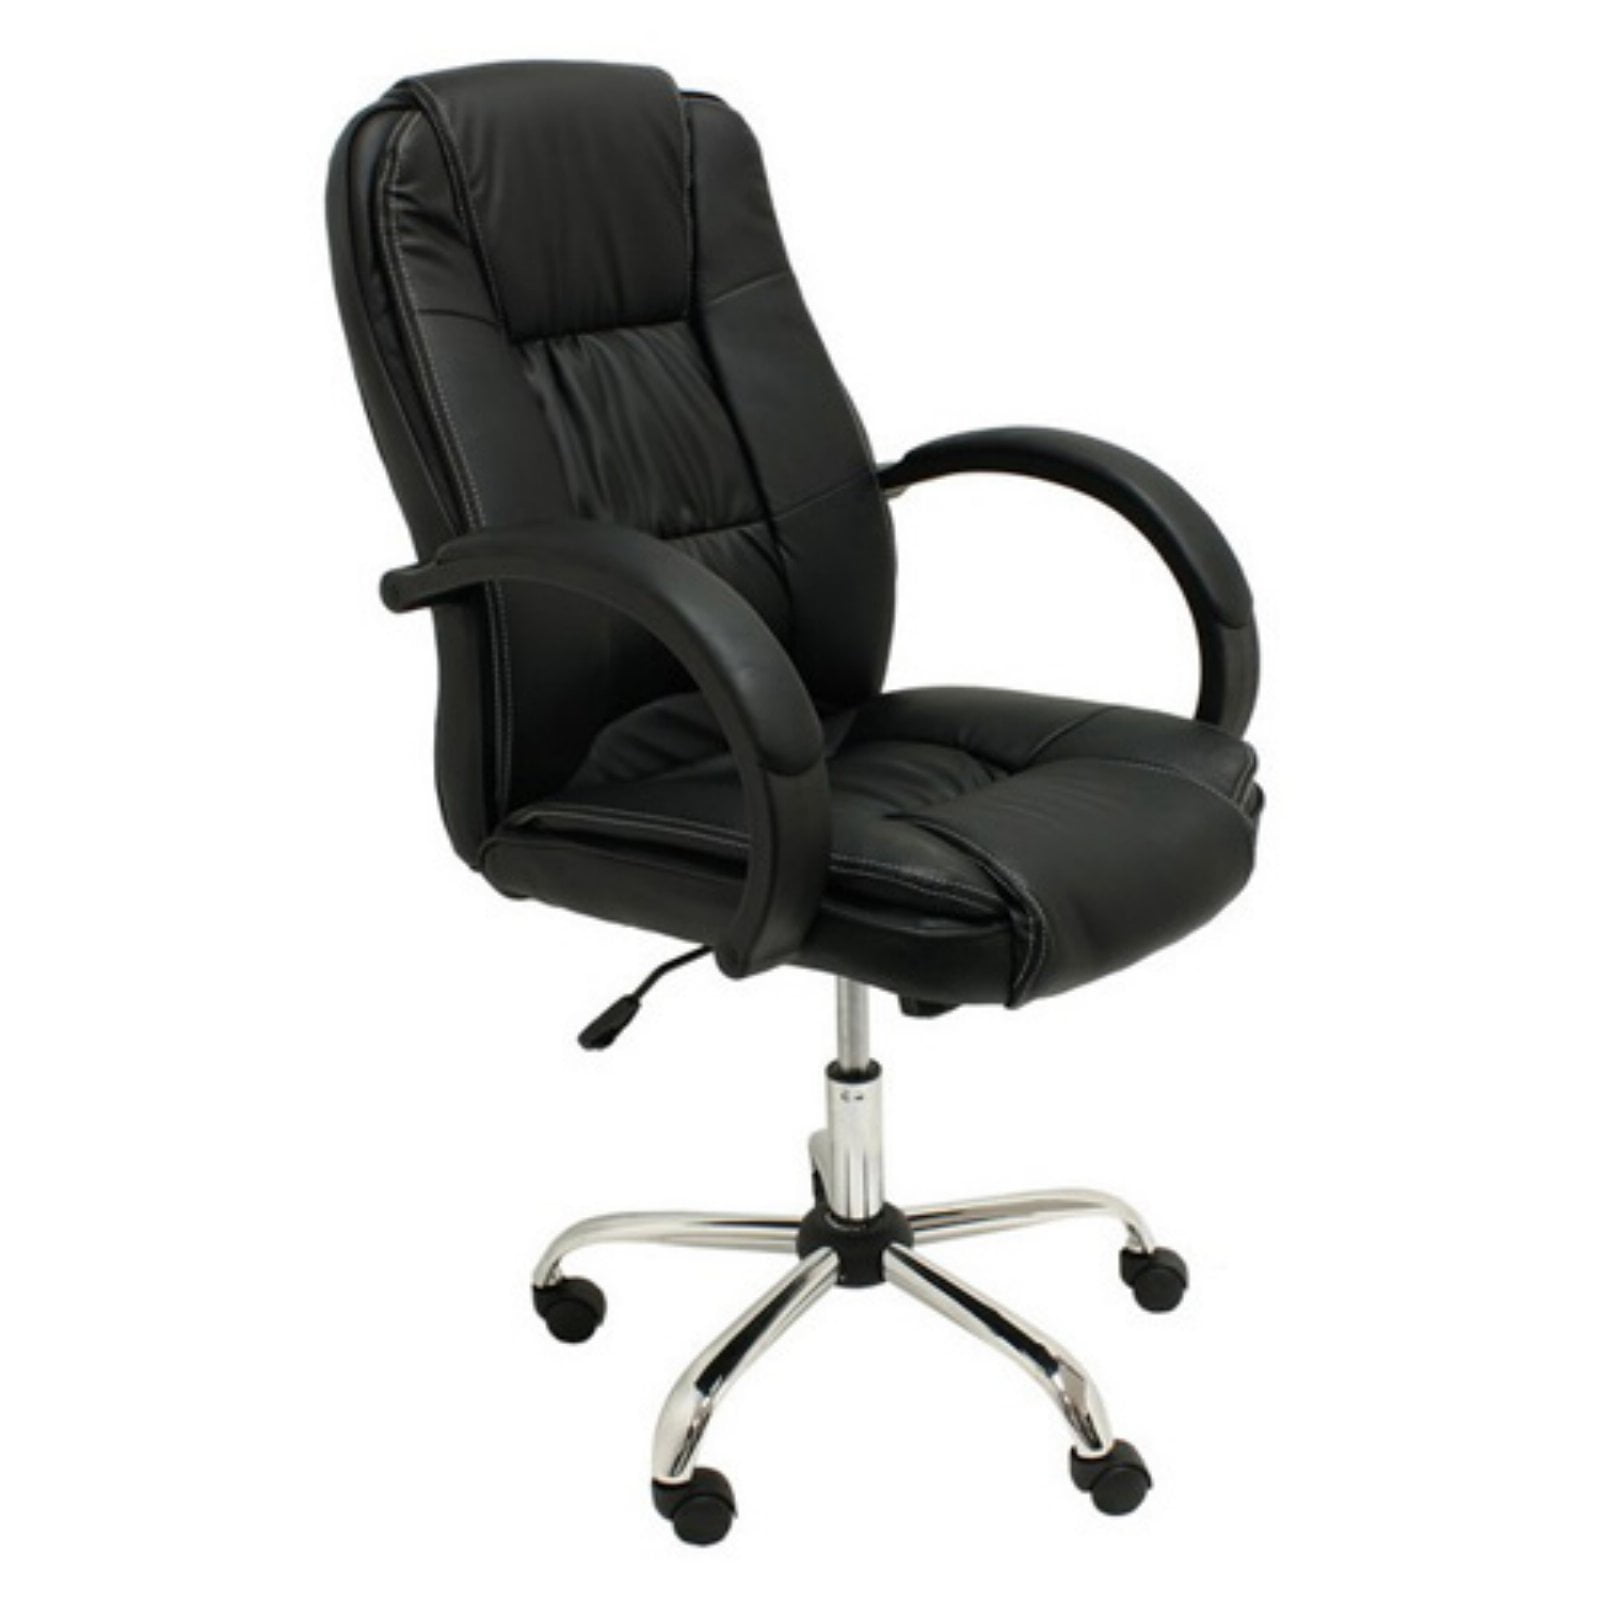 ALEKO High Back Office Chair Ergonomic Computer Desk Chair Brown PU Leather 